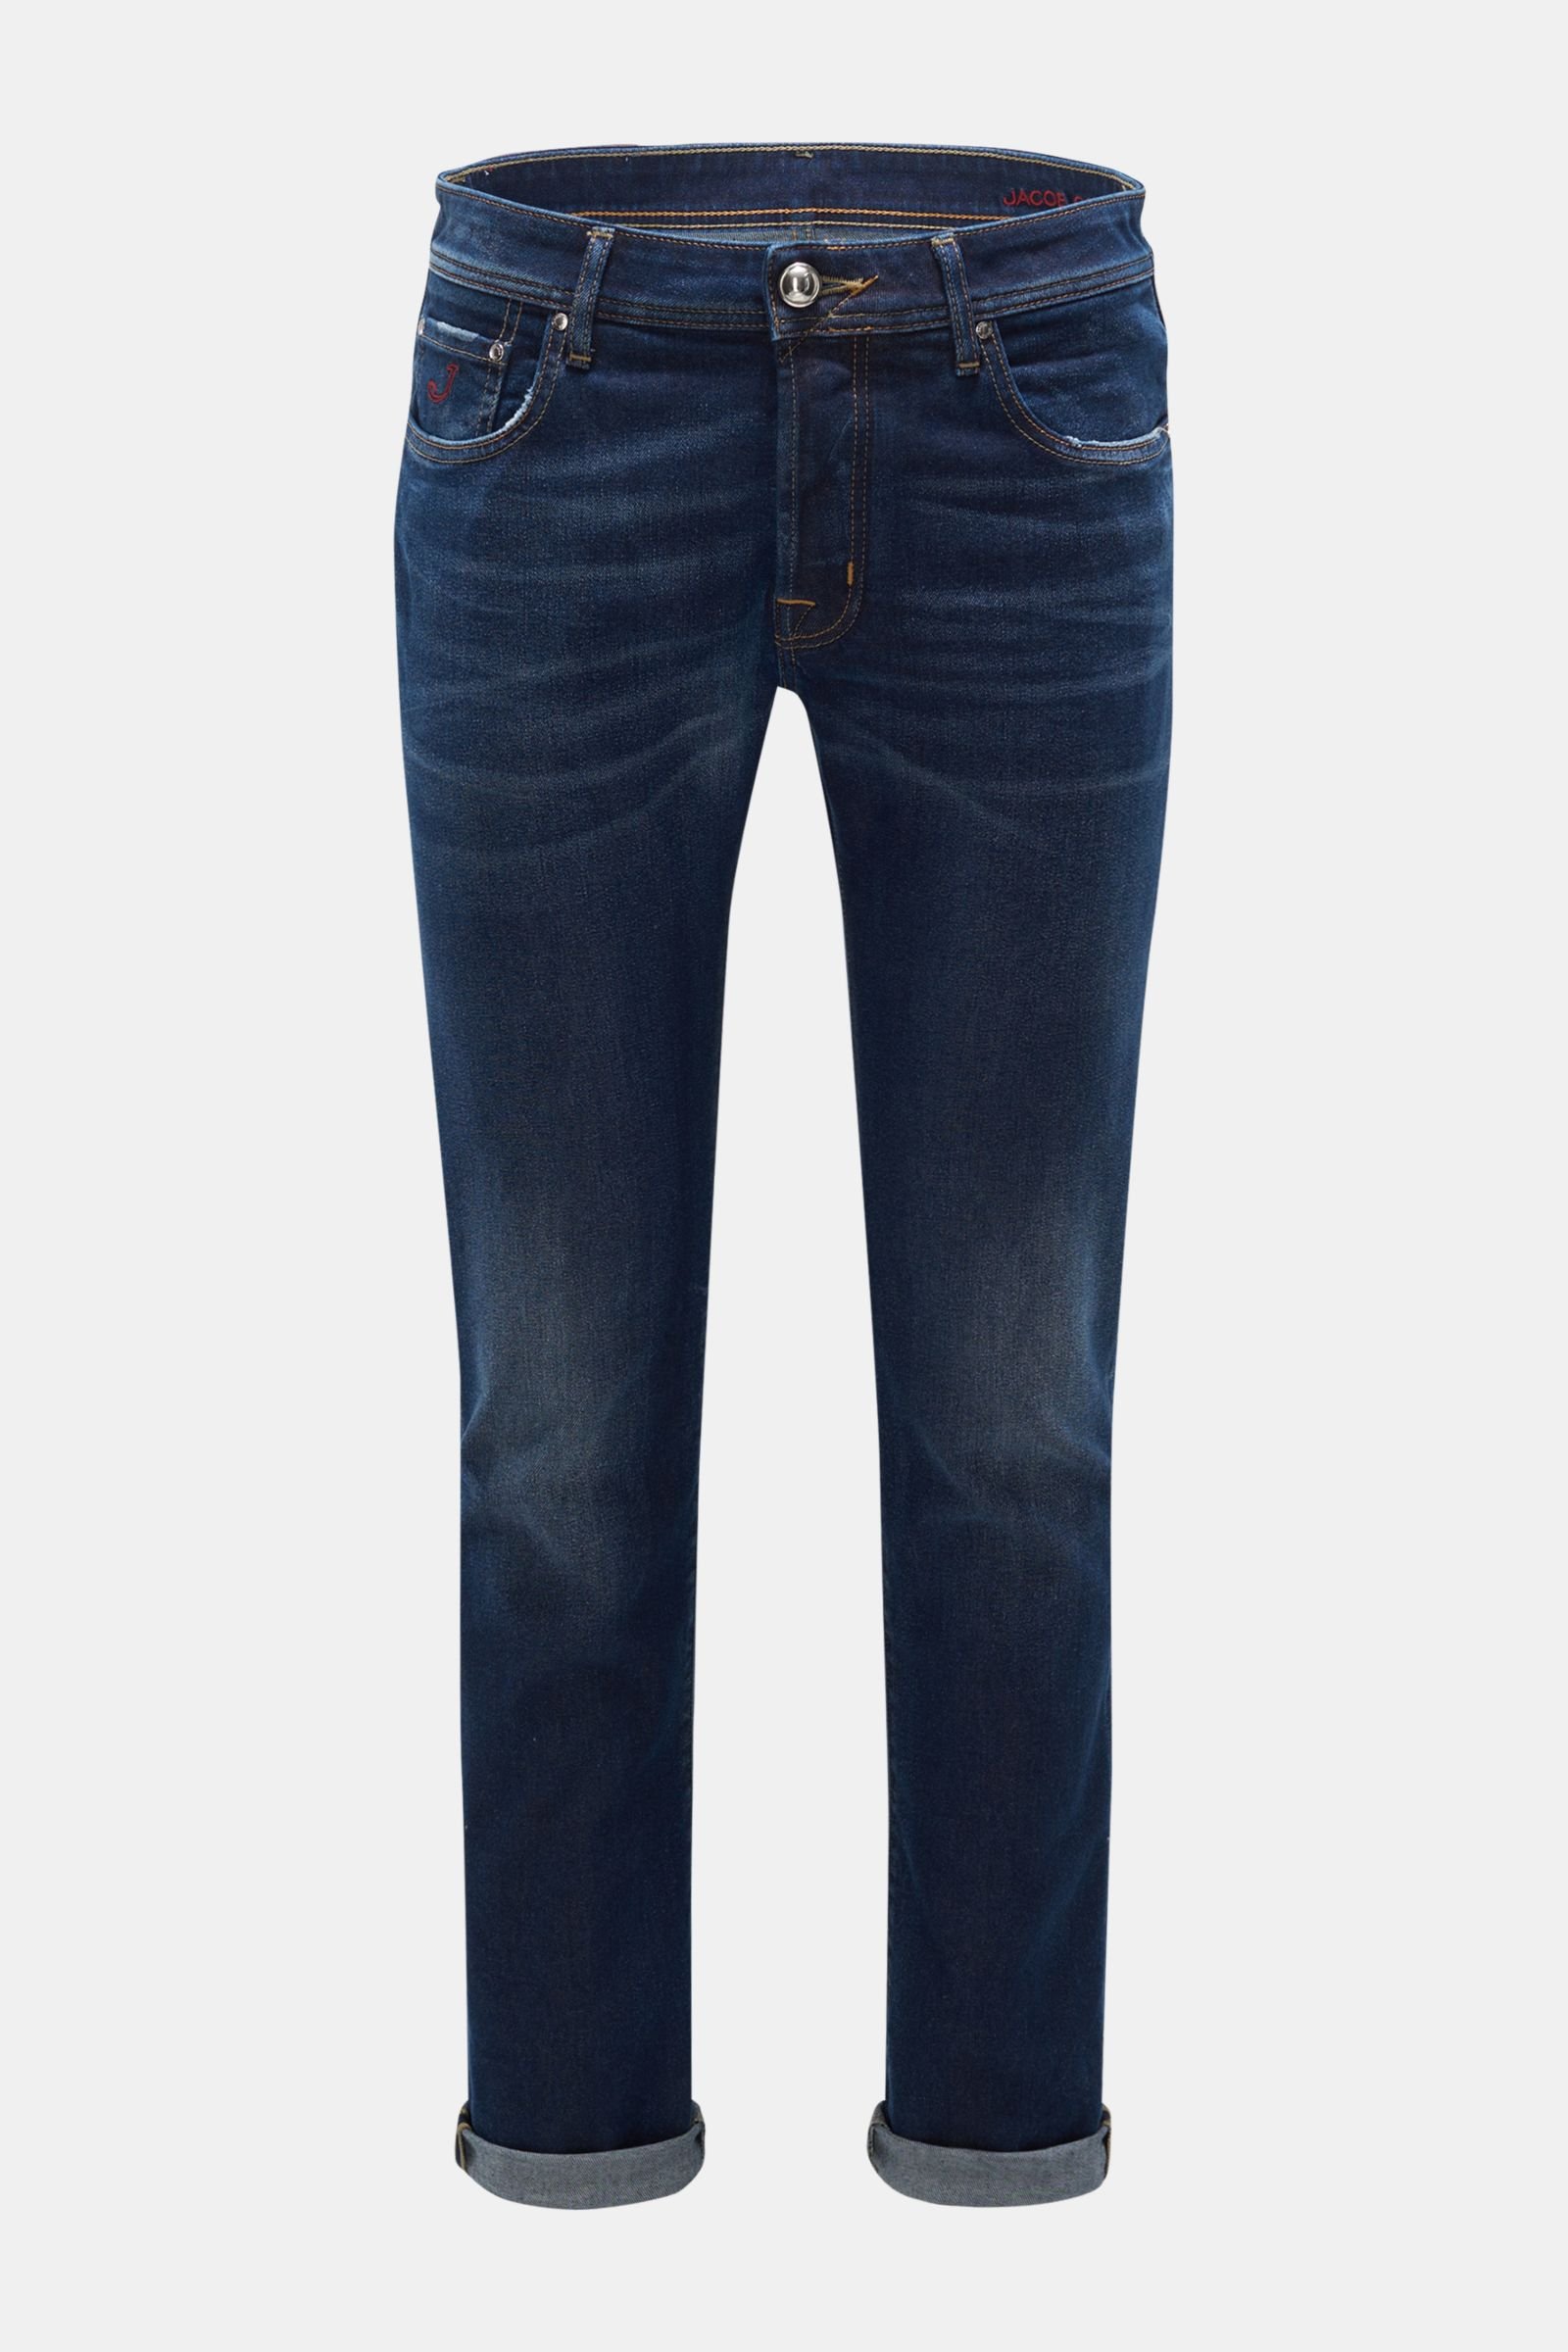 JACOB COHEN jeans 'J688 Comfort Slim Fit' navy | BRAUN Hamburg